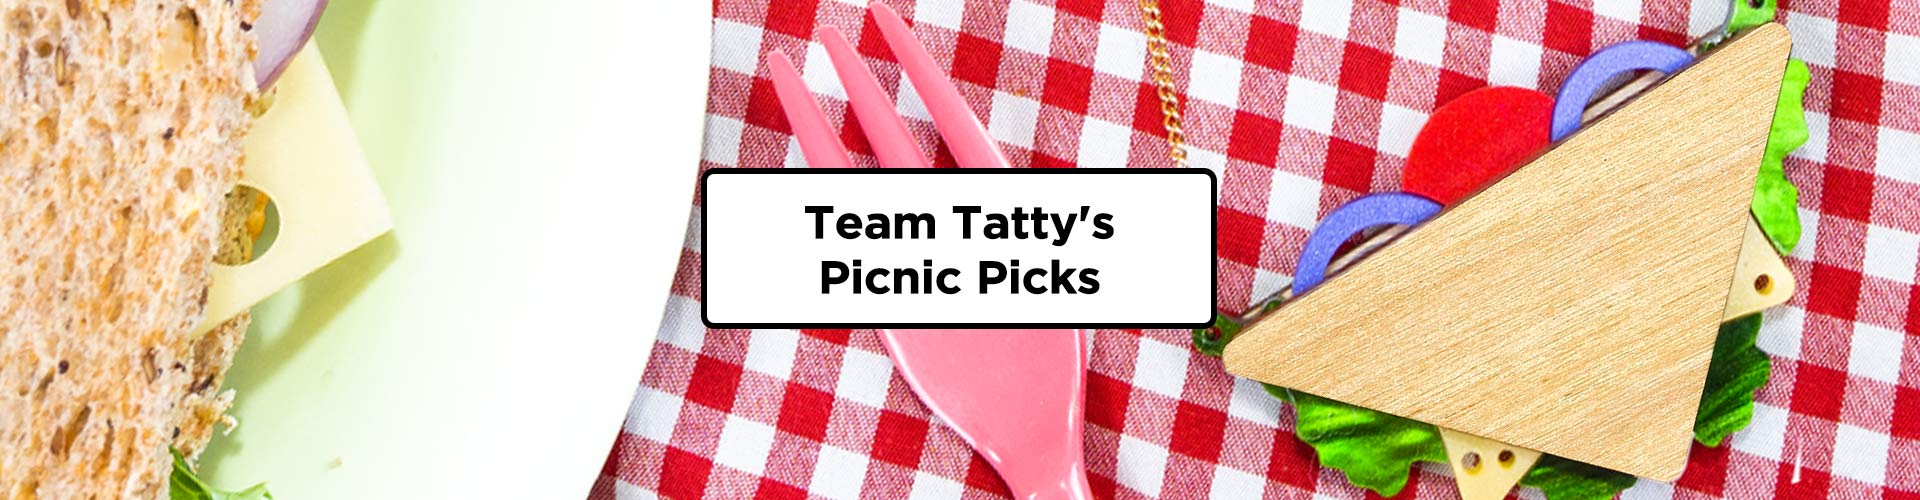 Team Tatty's Picnic Picks